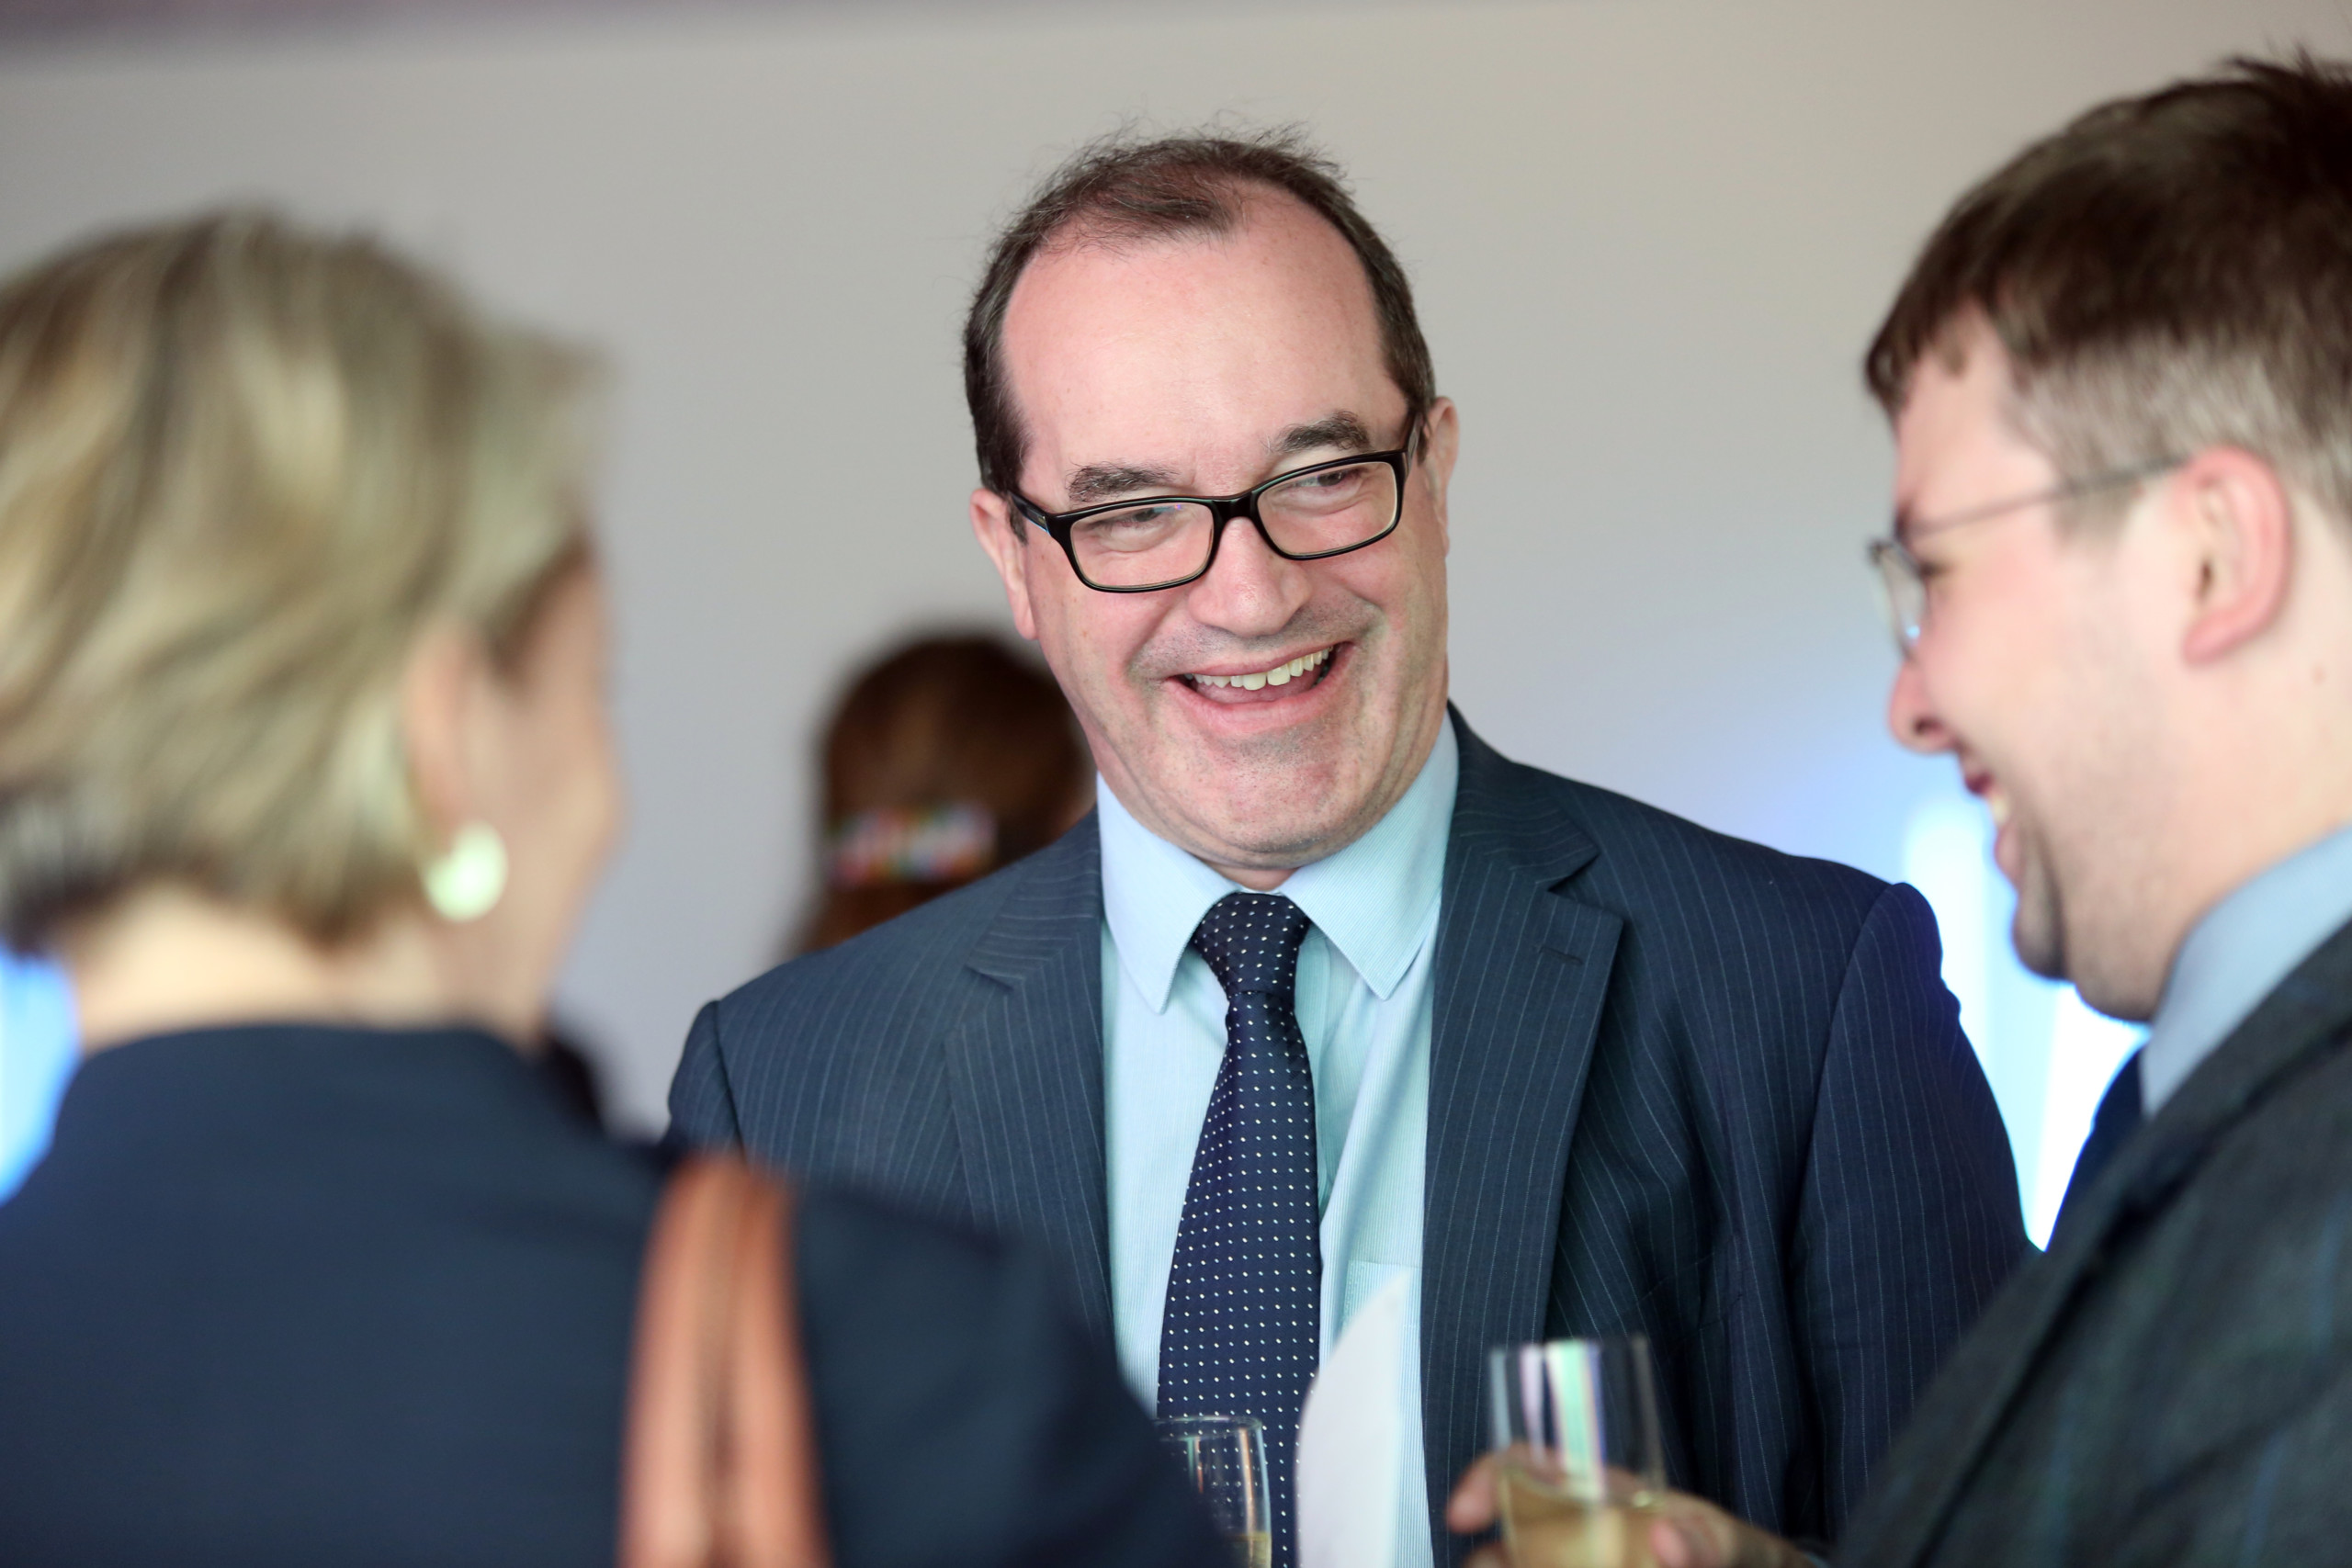 Jonathan Peel at drinks reception smiling at guests